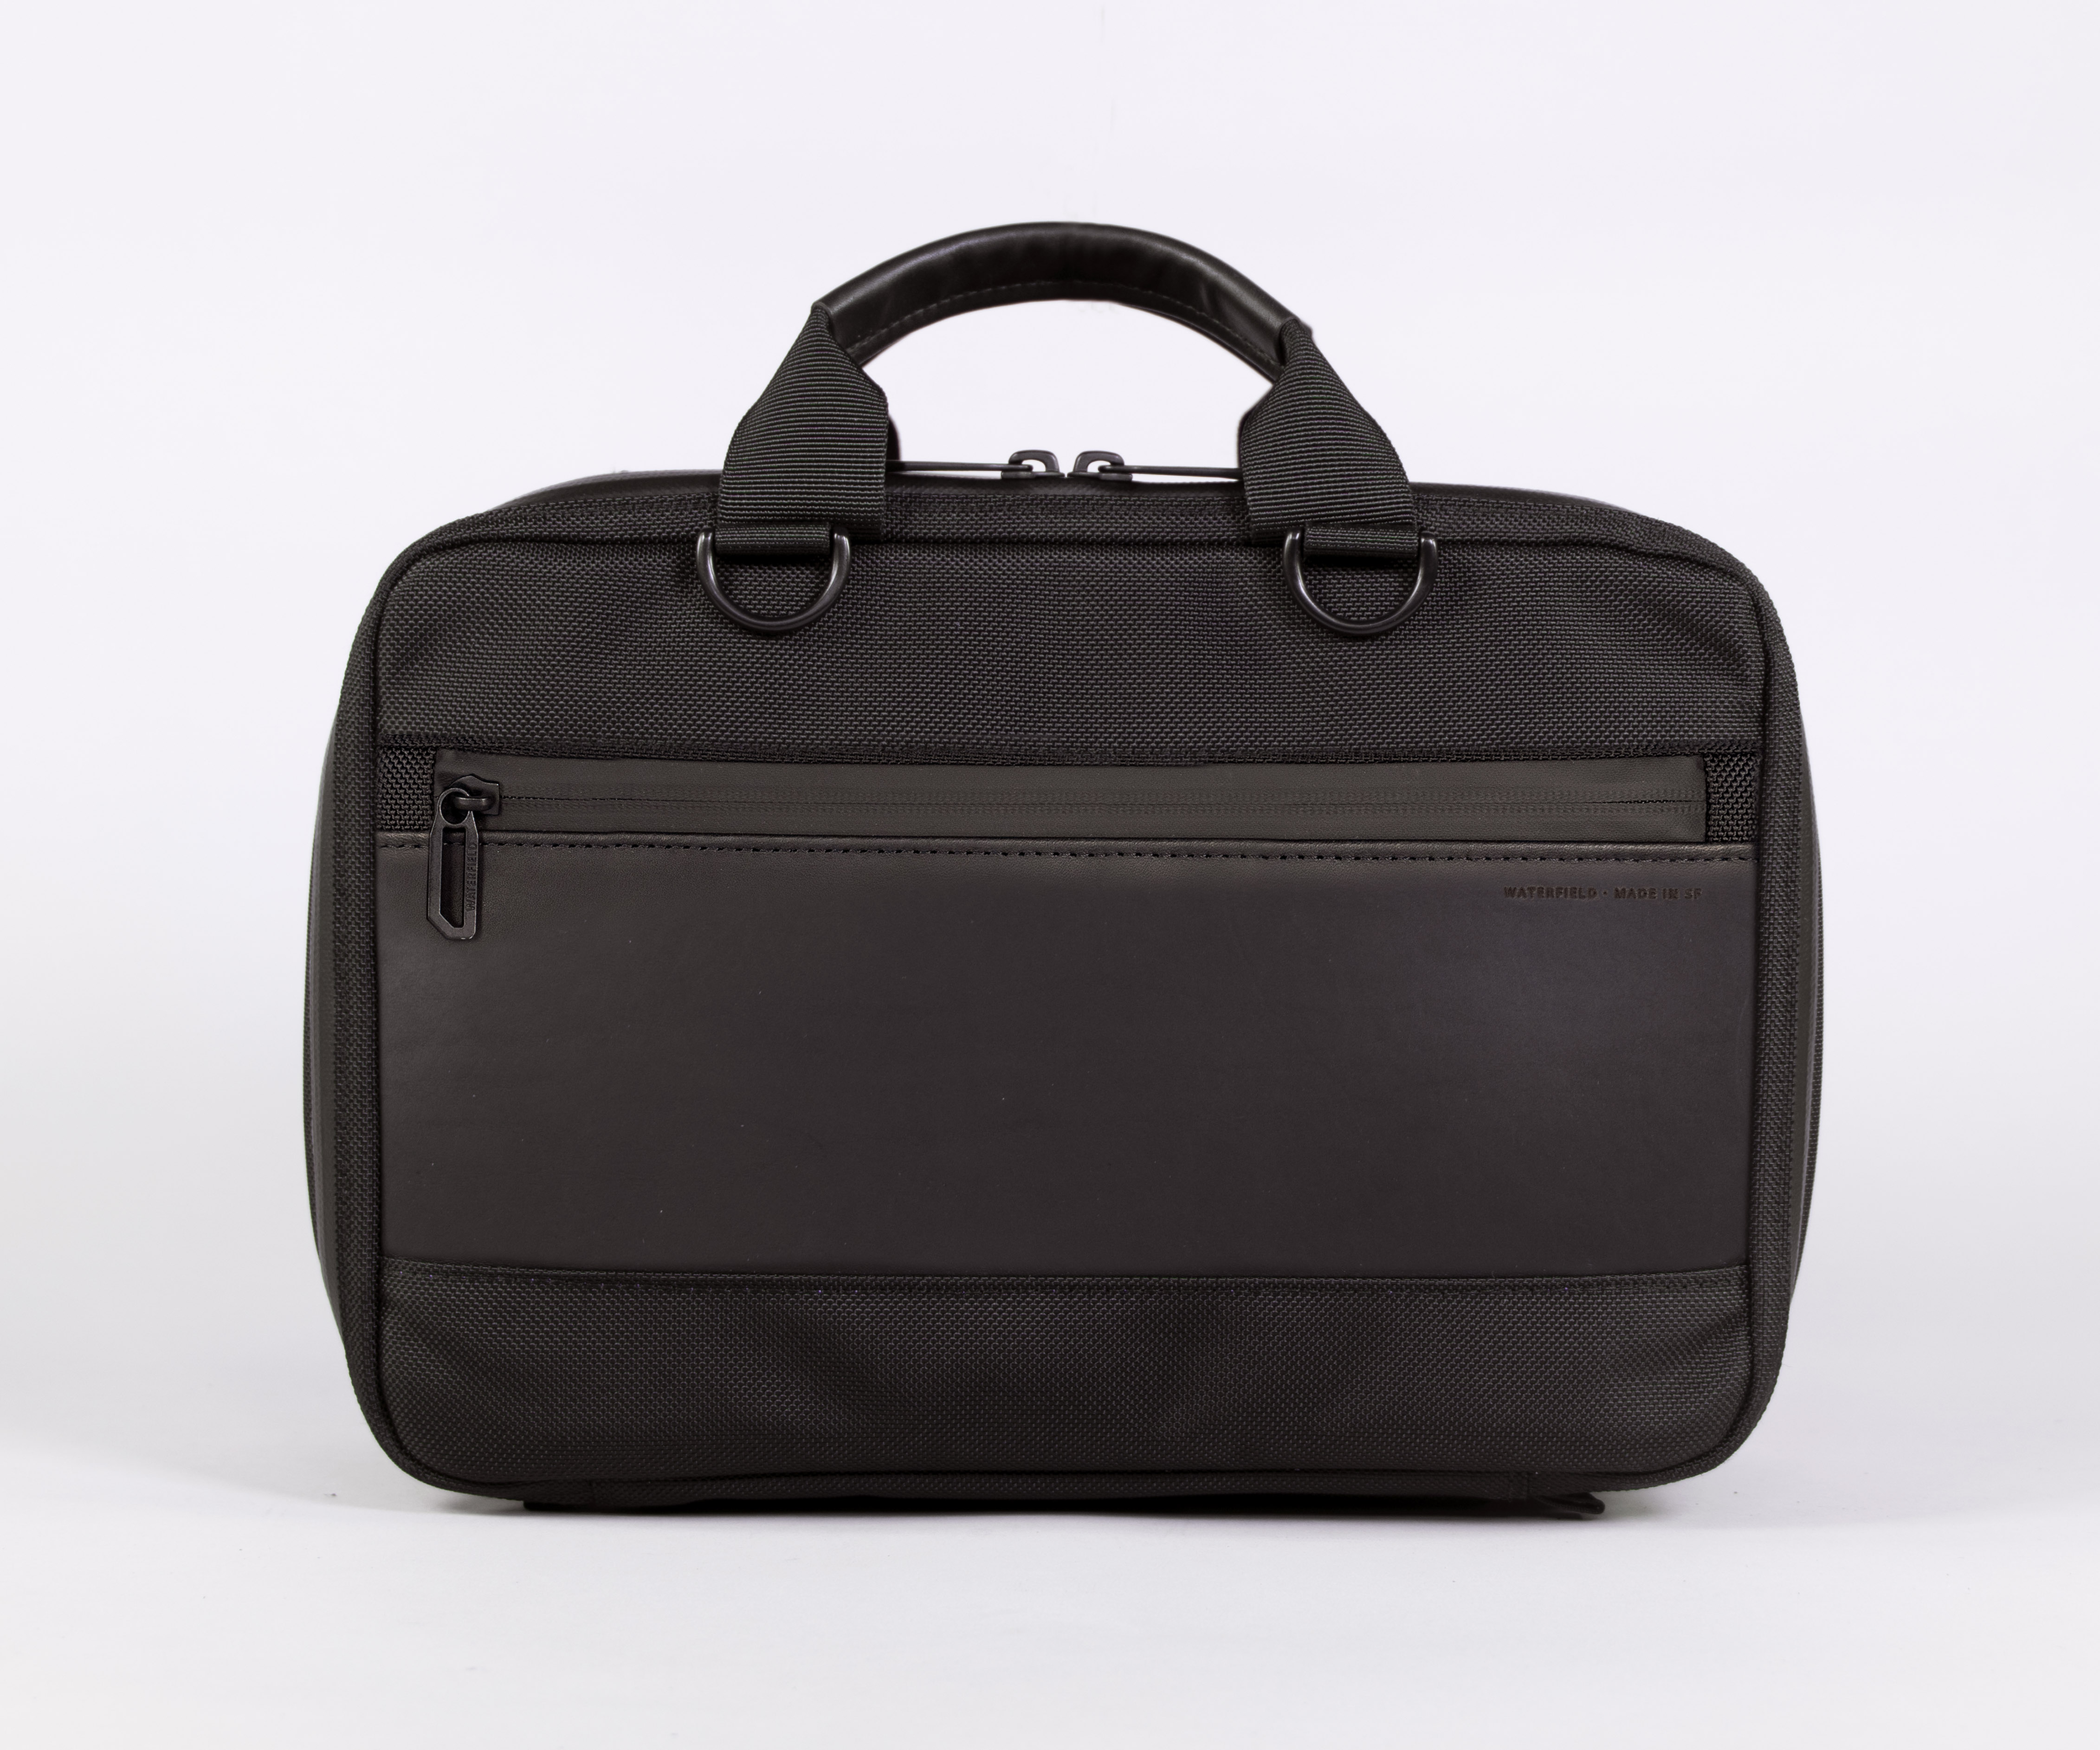 Mac Studio Travel Bag in black ballistic nylon and black full-grain leather